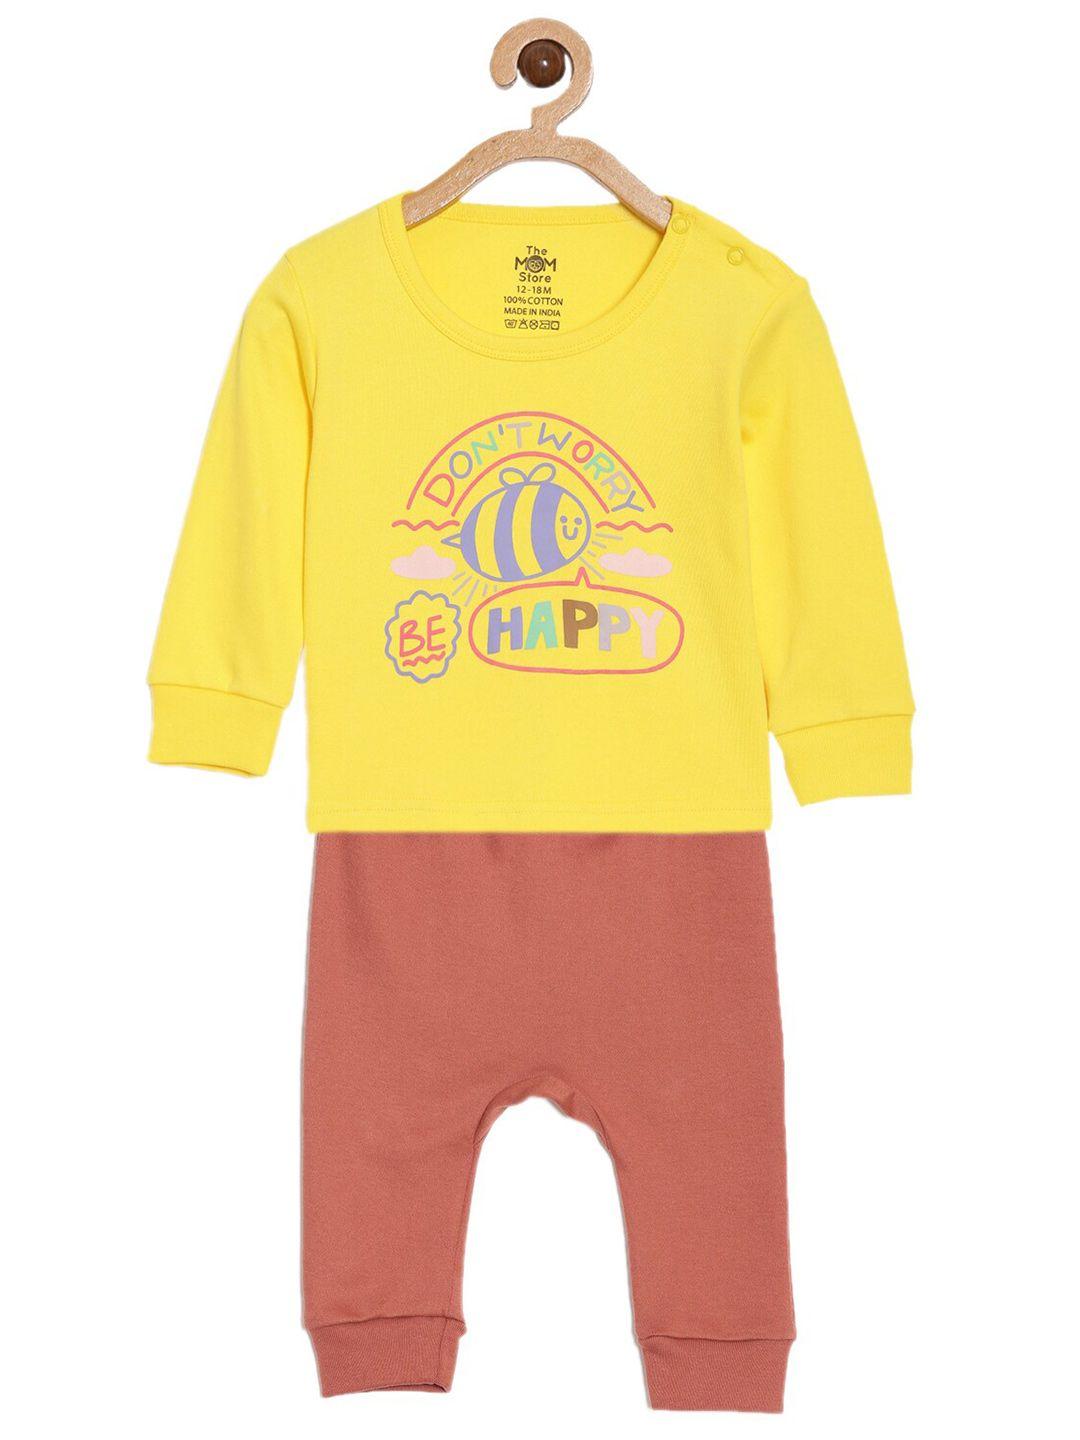 the mom store unisex kids yellow & brown printed t-shirt with pyjamas